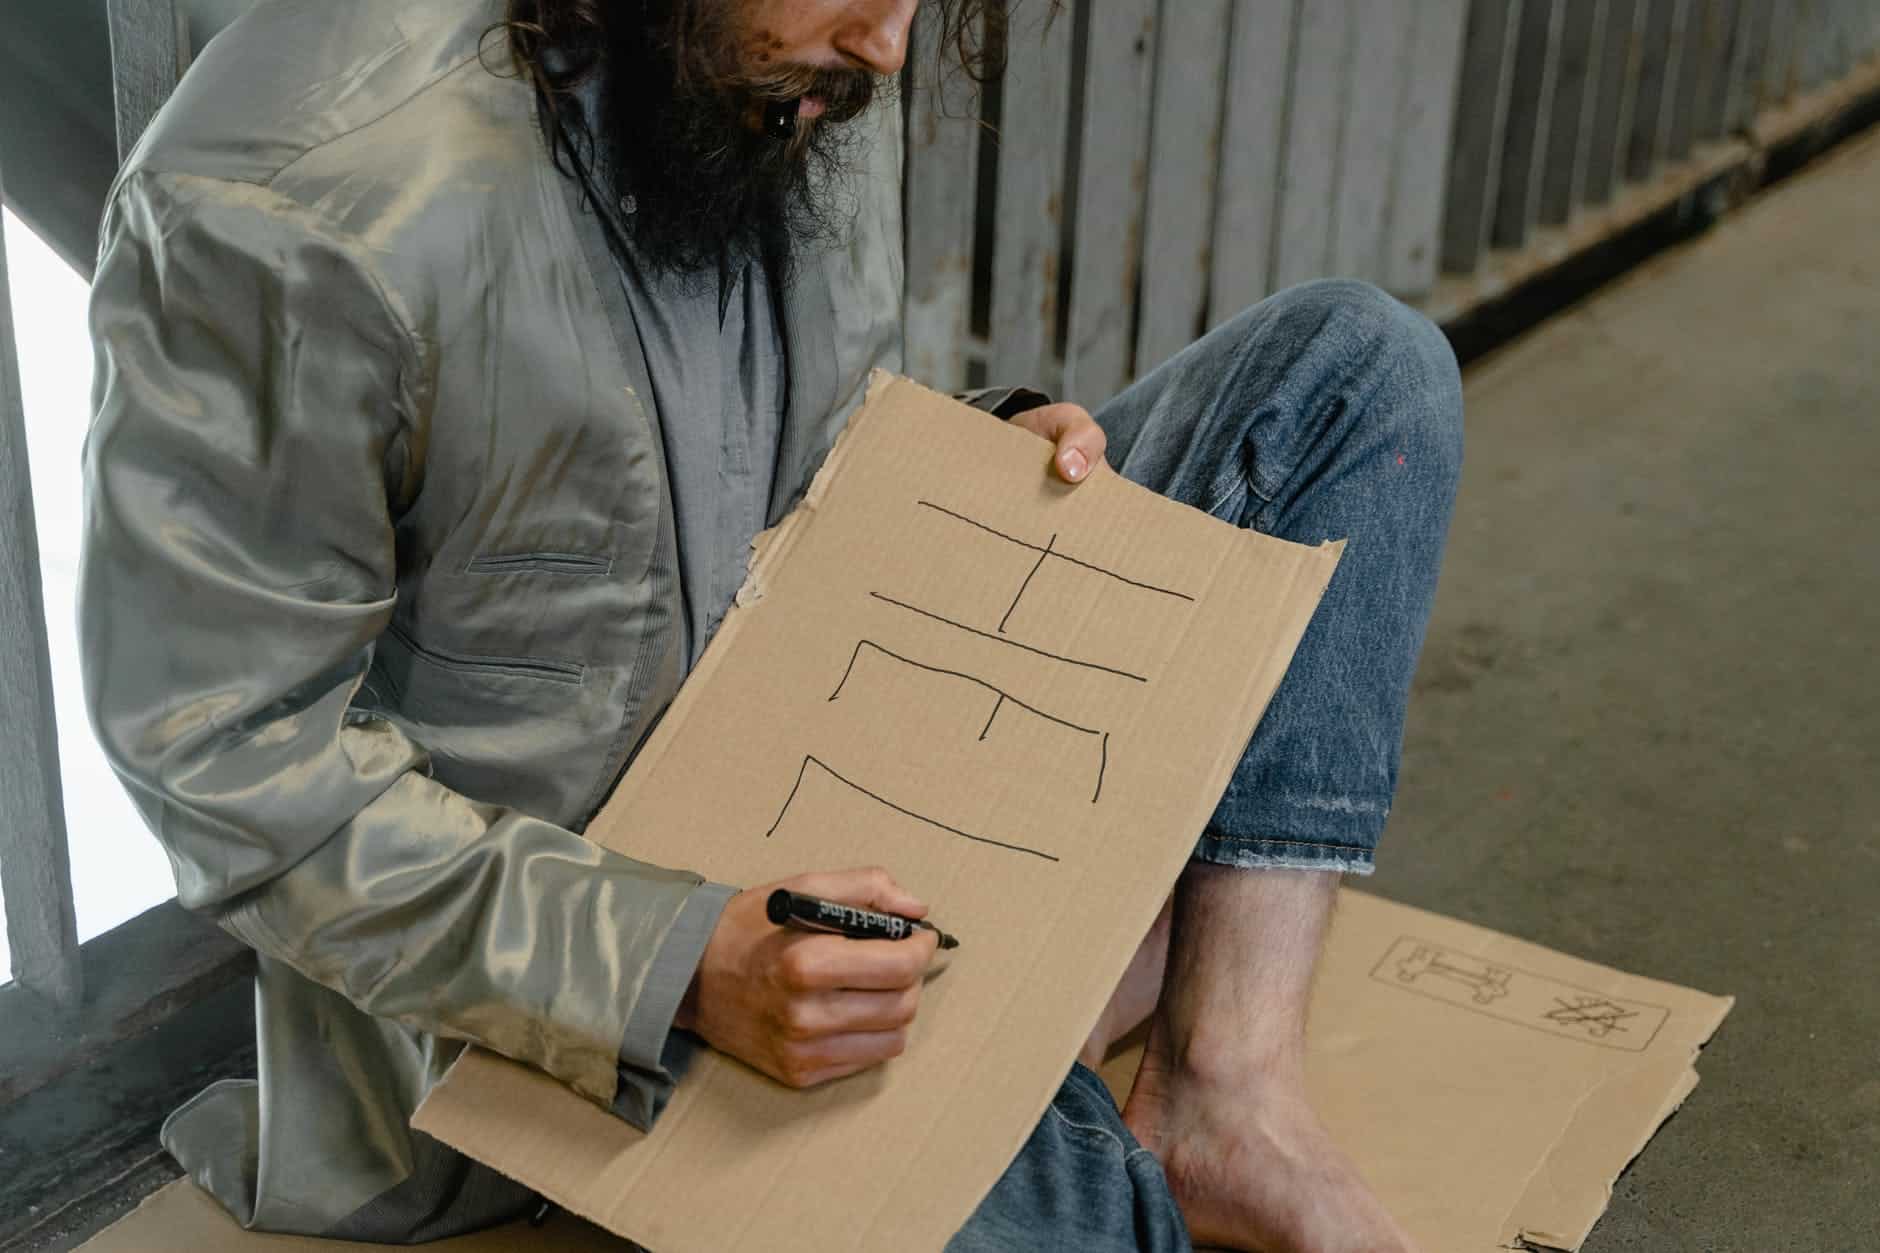 Homeless French man writes a bestseller